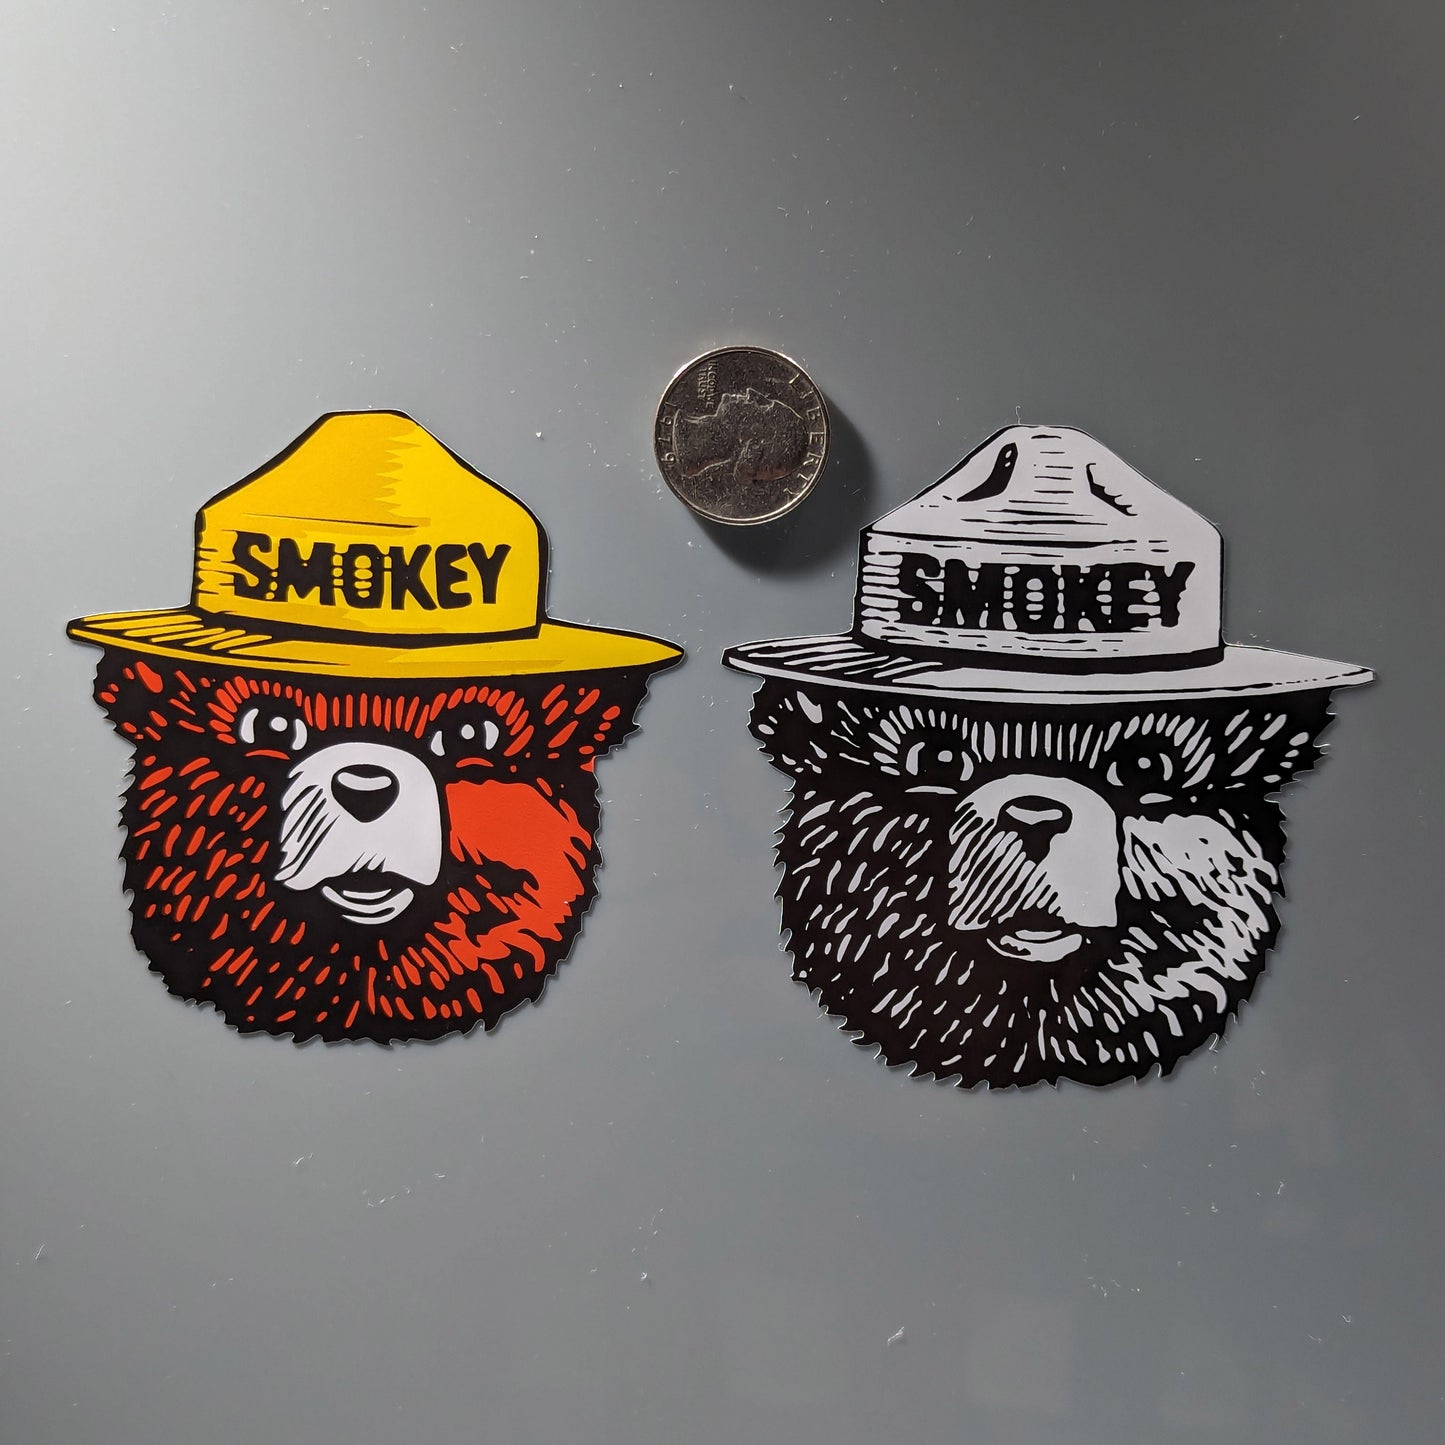 NEW Smokey Bear Decal